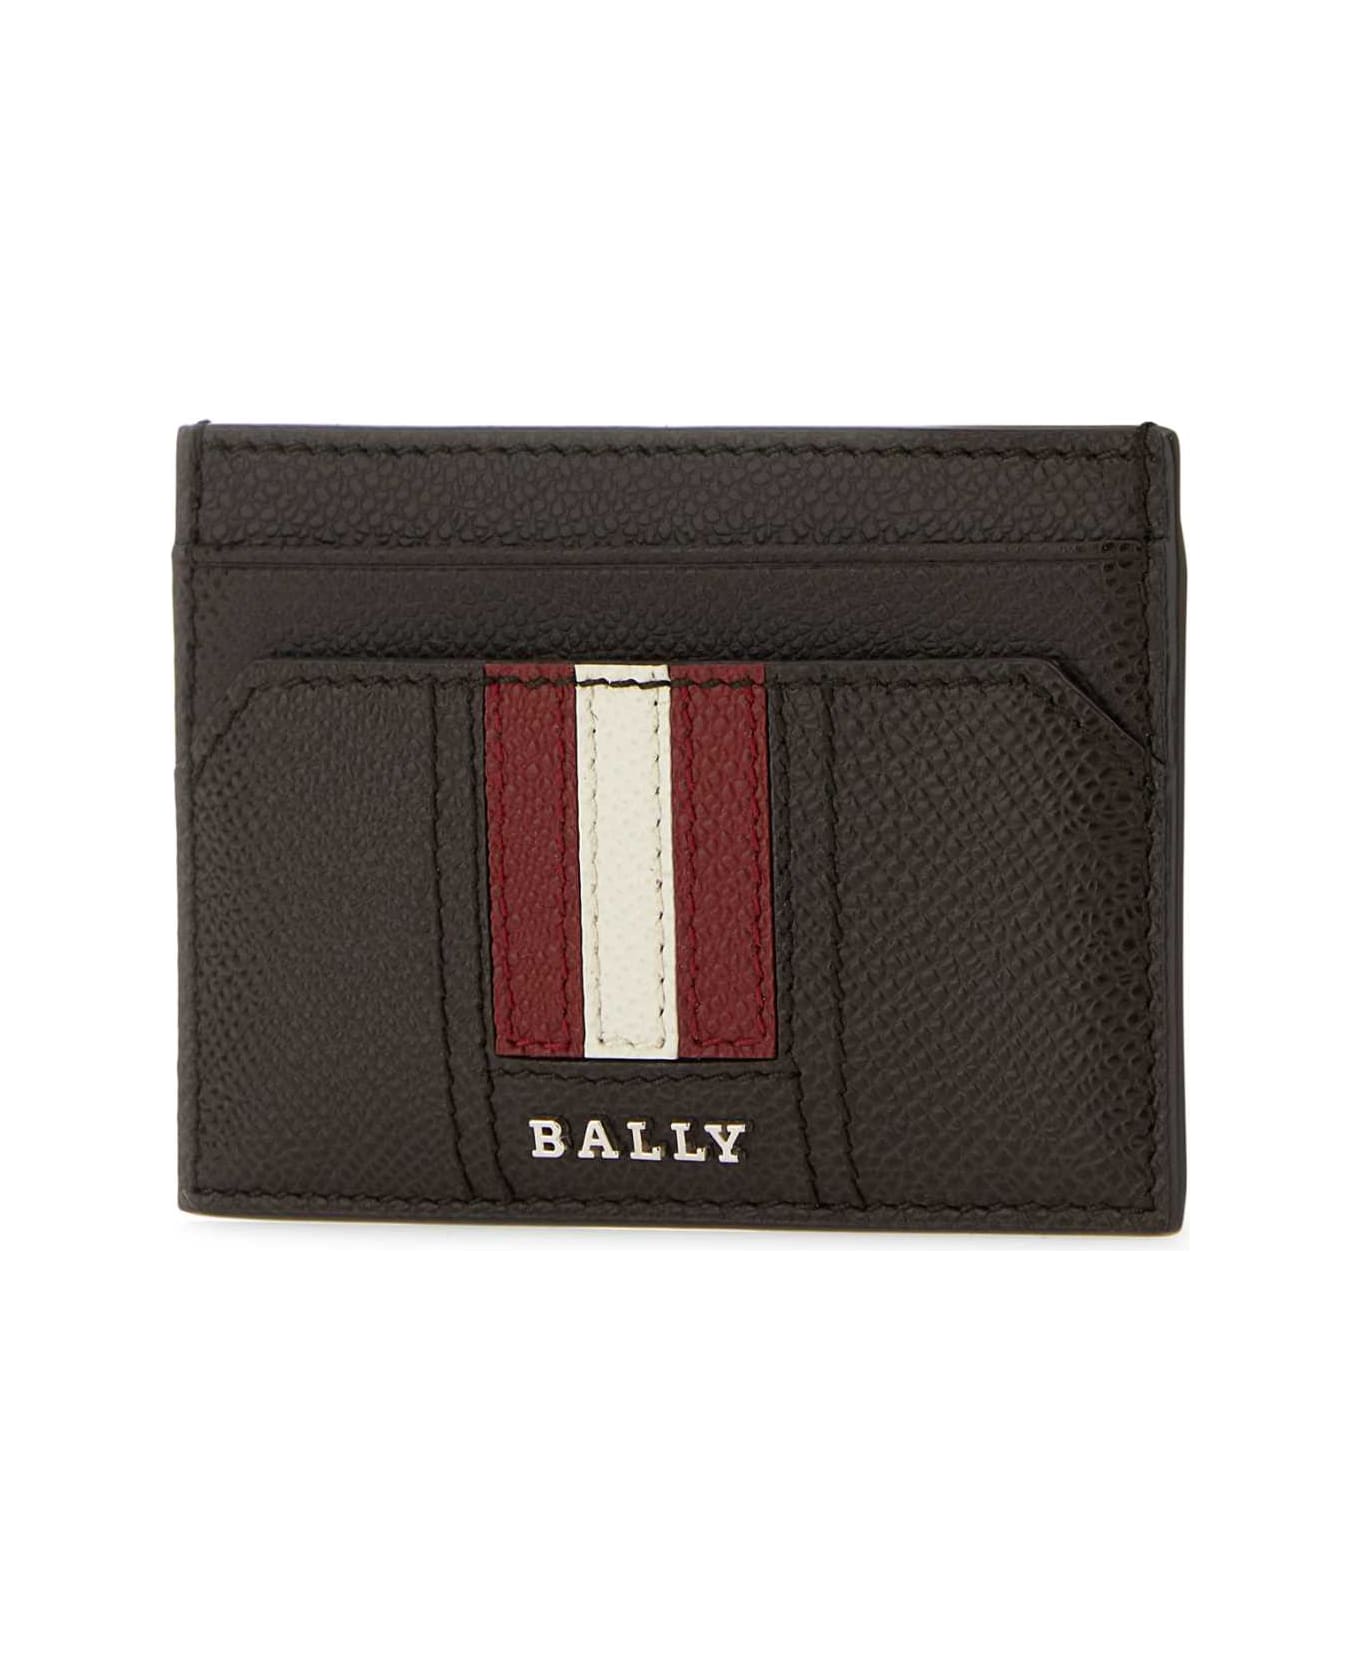 Bally Chocolate Leather Thar Card Holder - F021 財布